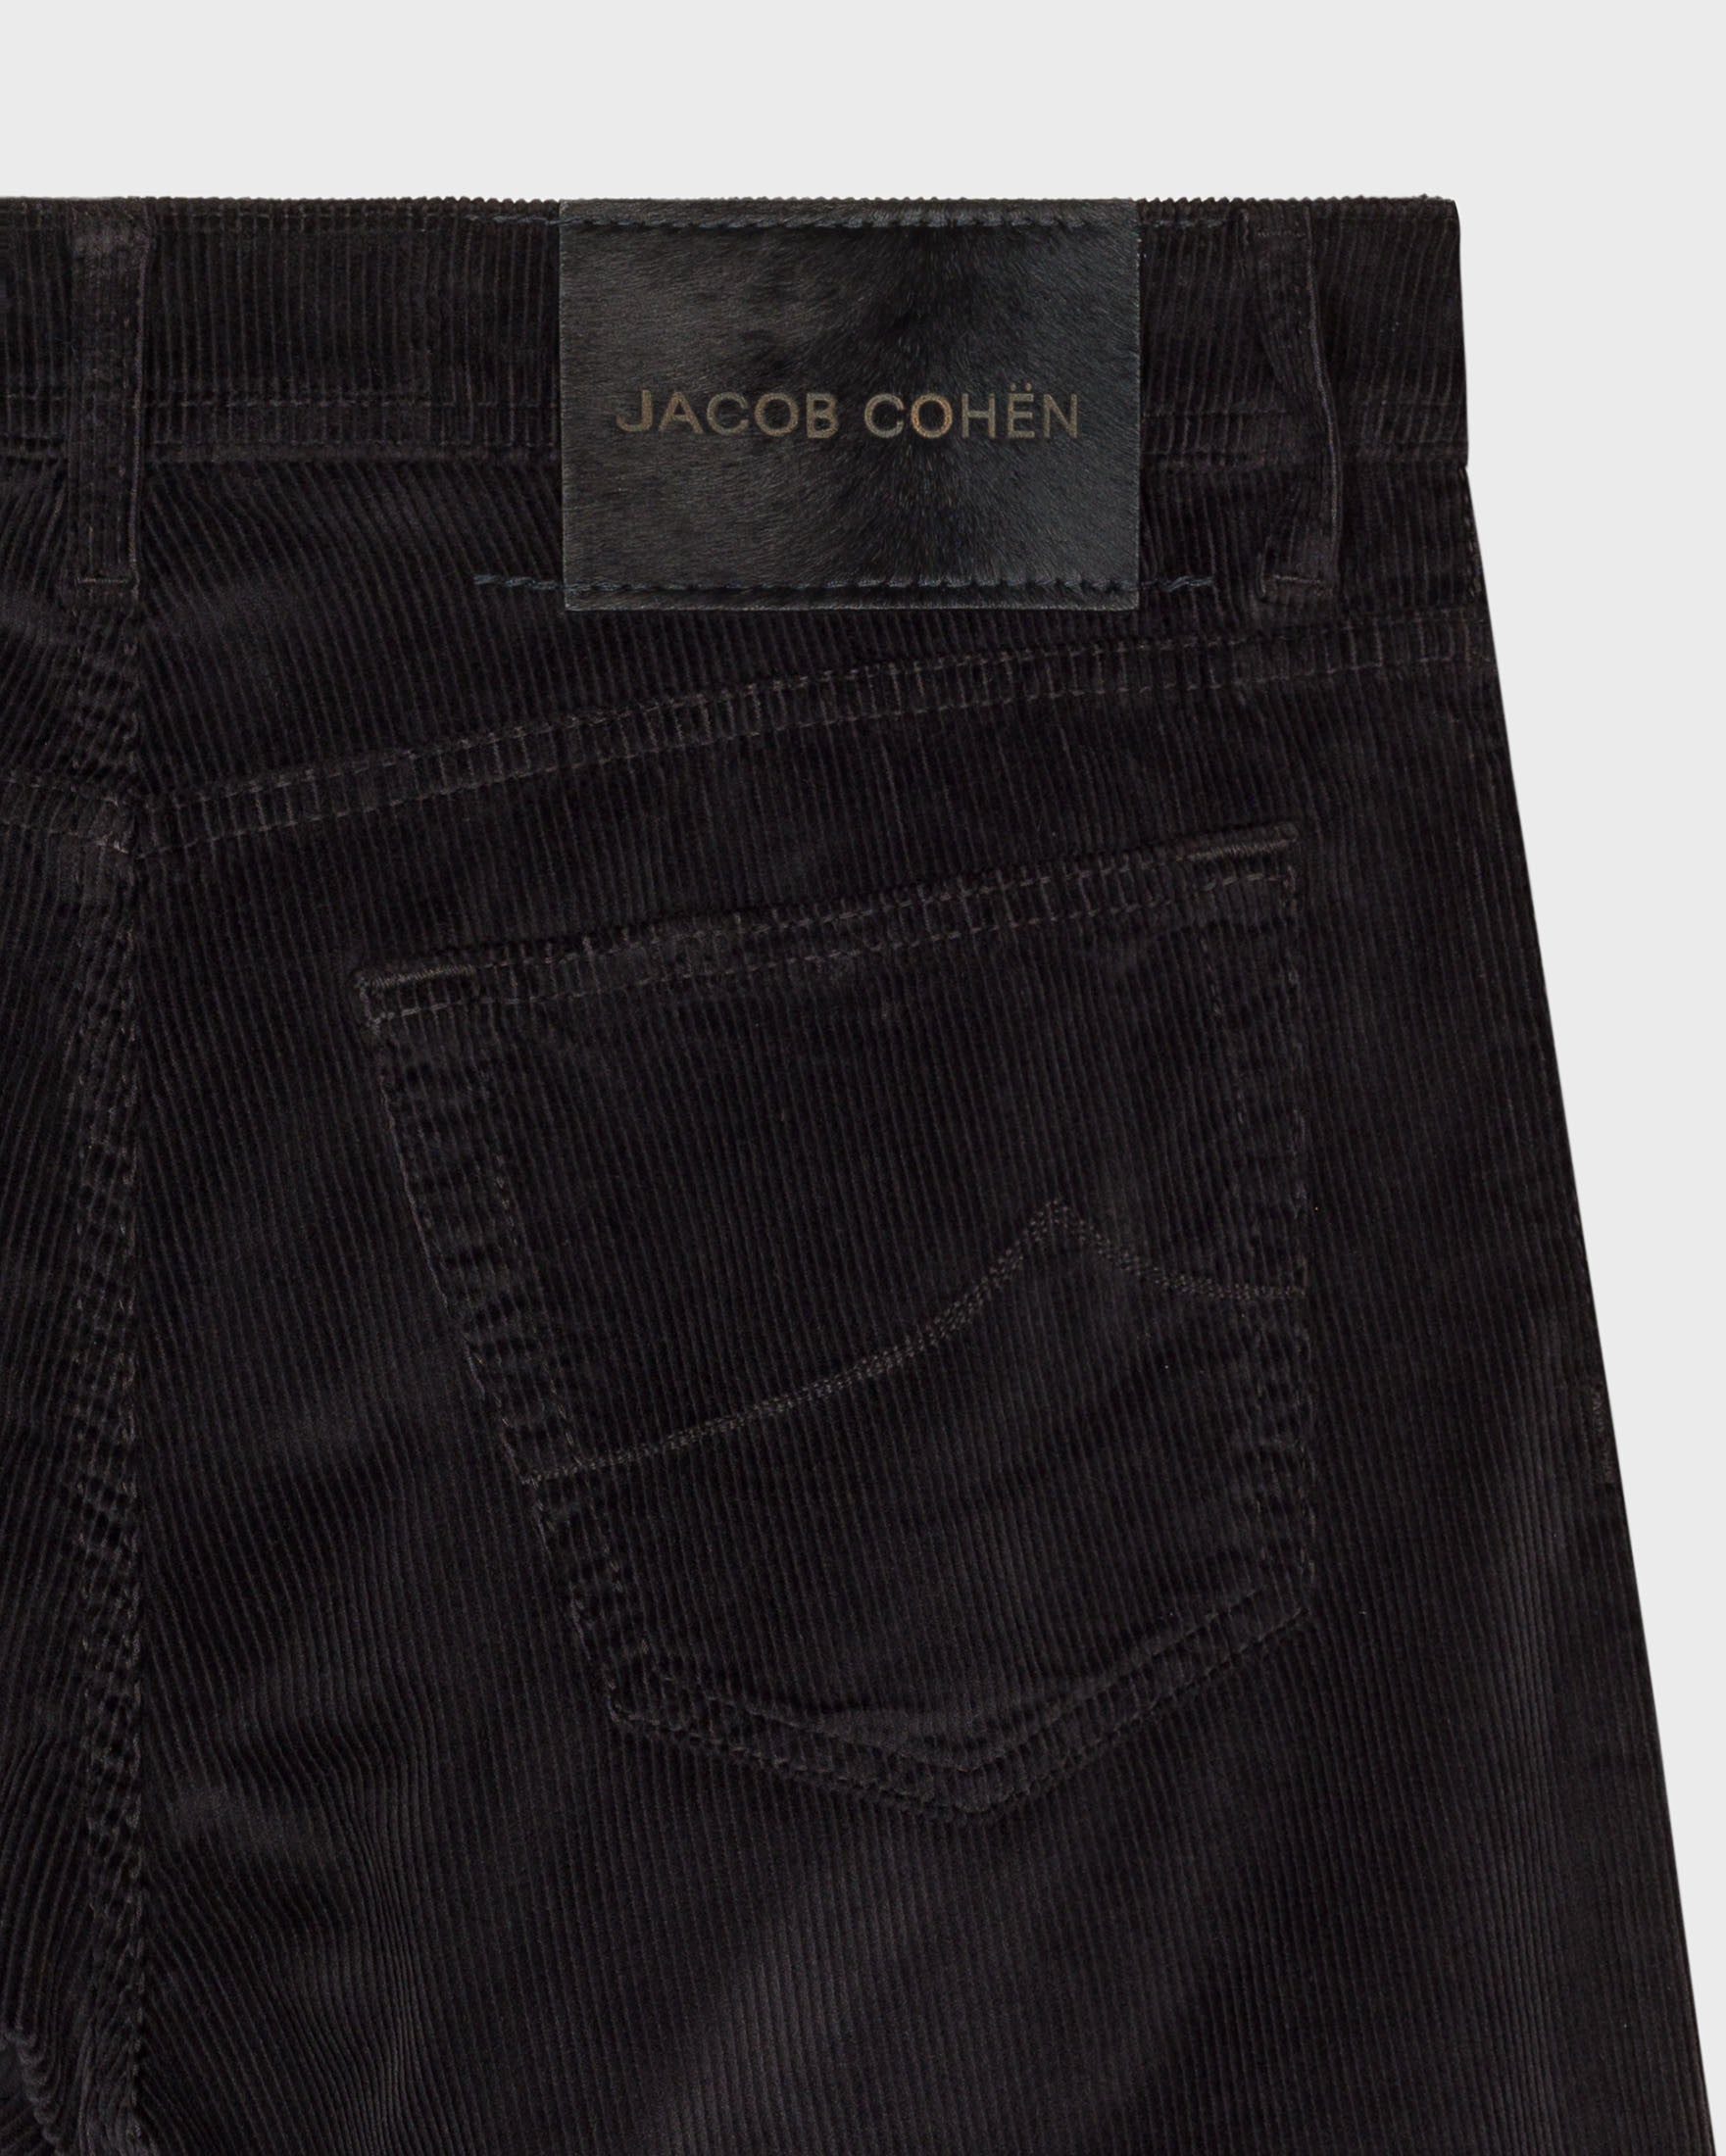 Jacob Cohen Bard CORDUROY BLACK